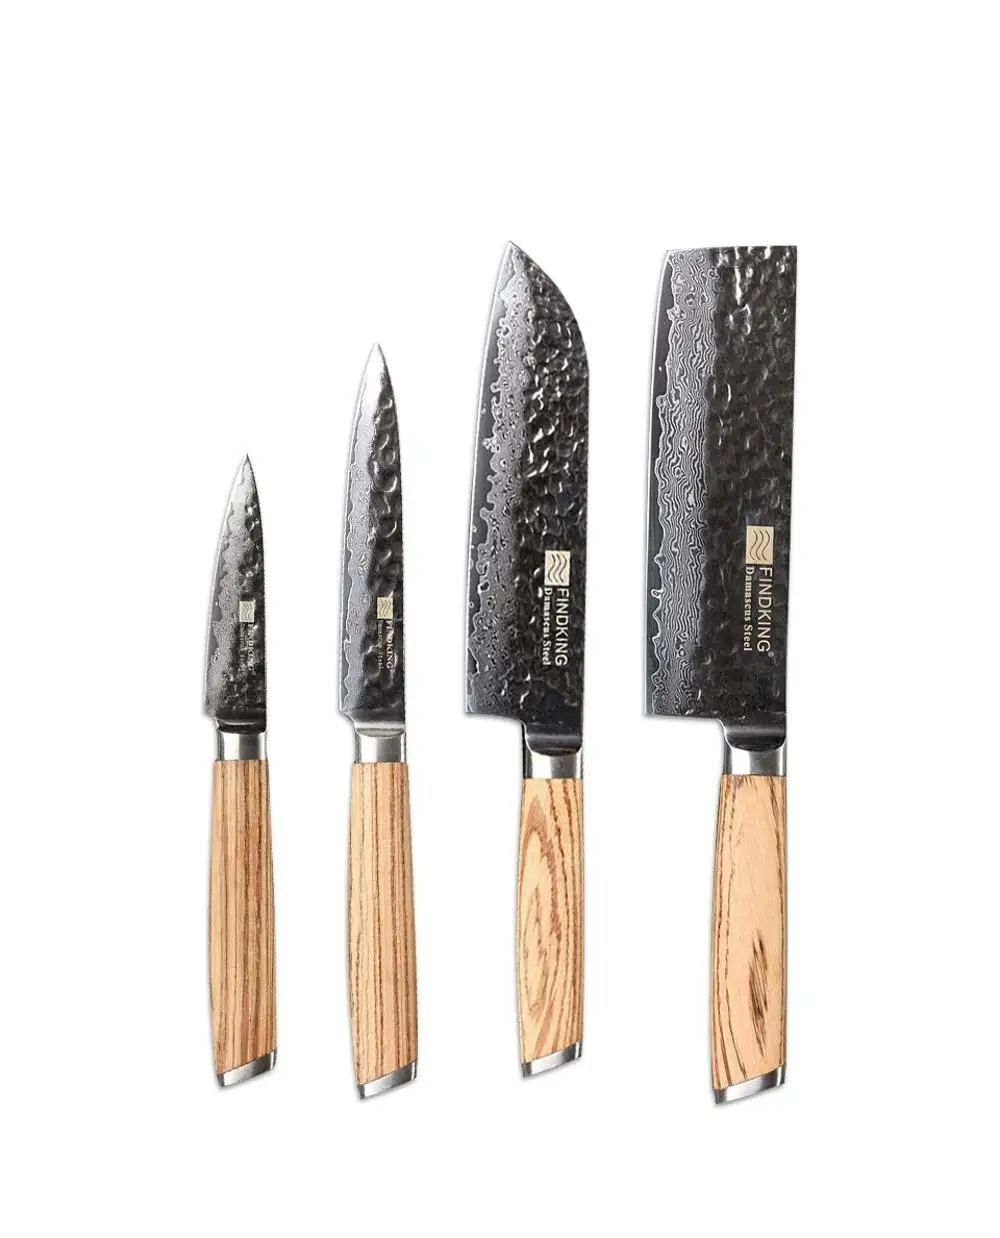 Source FINDKING 4pcs Zebra Handle Damascus Chef Knives Multi-function japanese Steel Kitchen Knife Set on m.alibaba.com